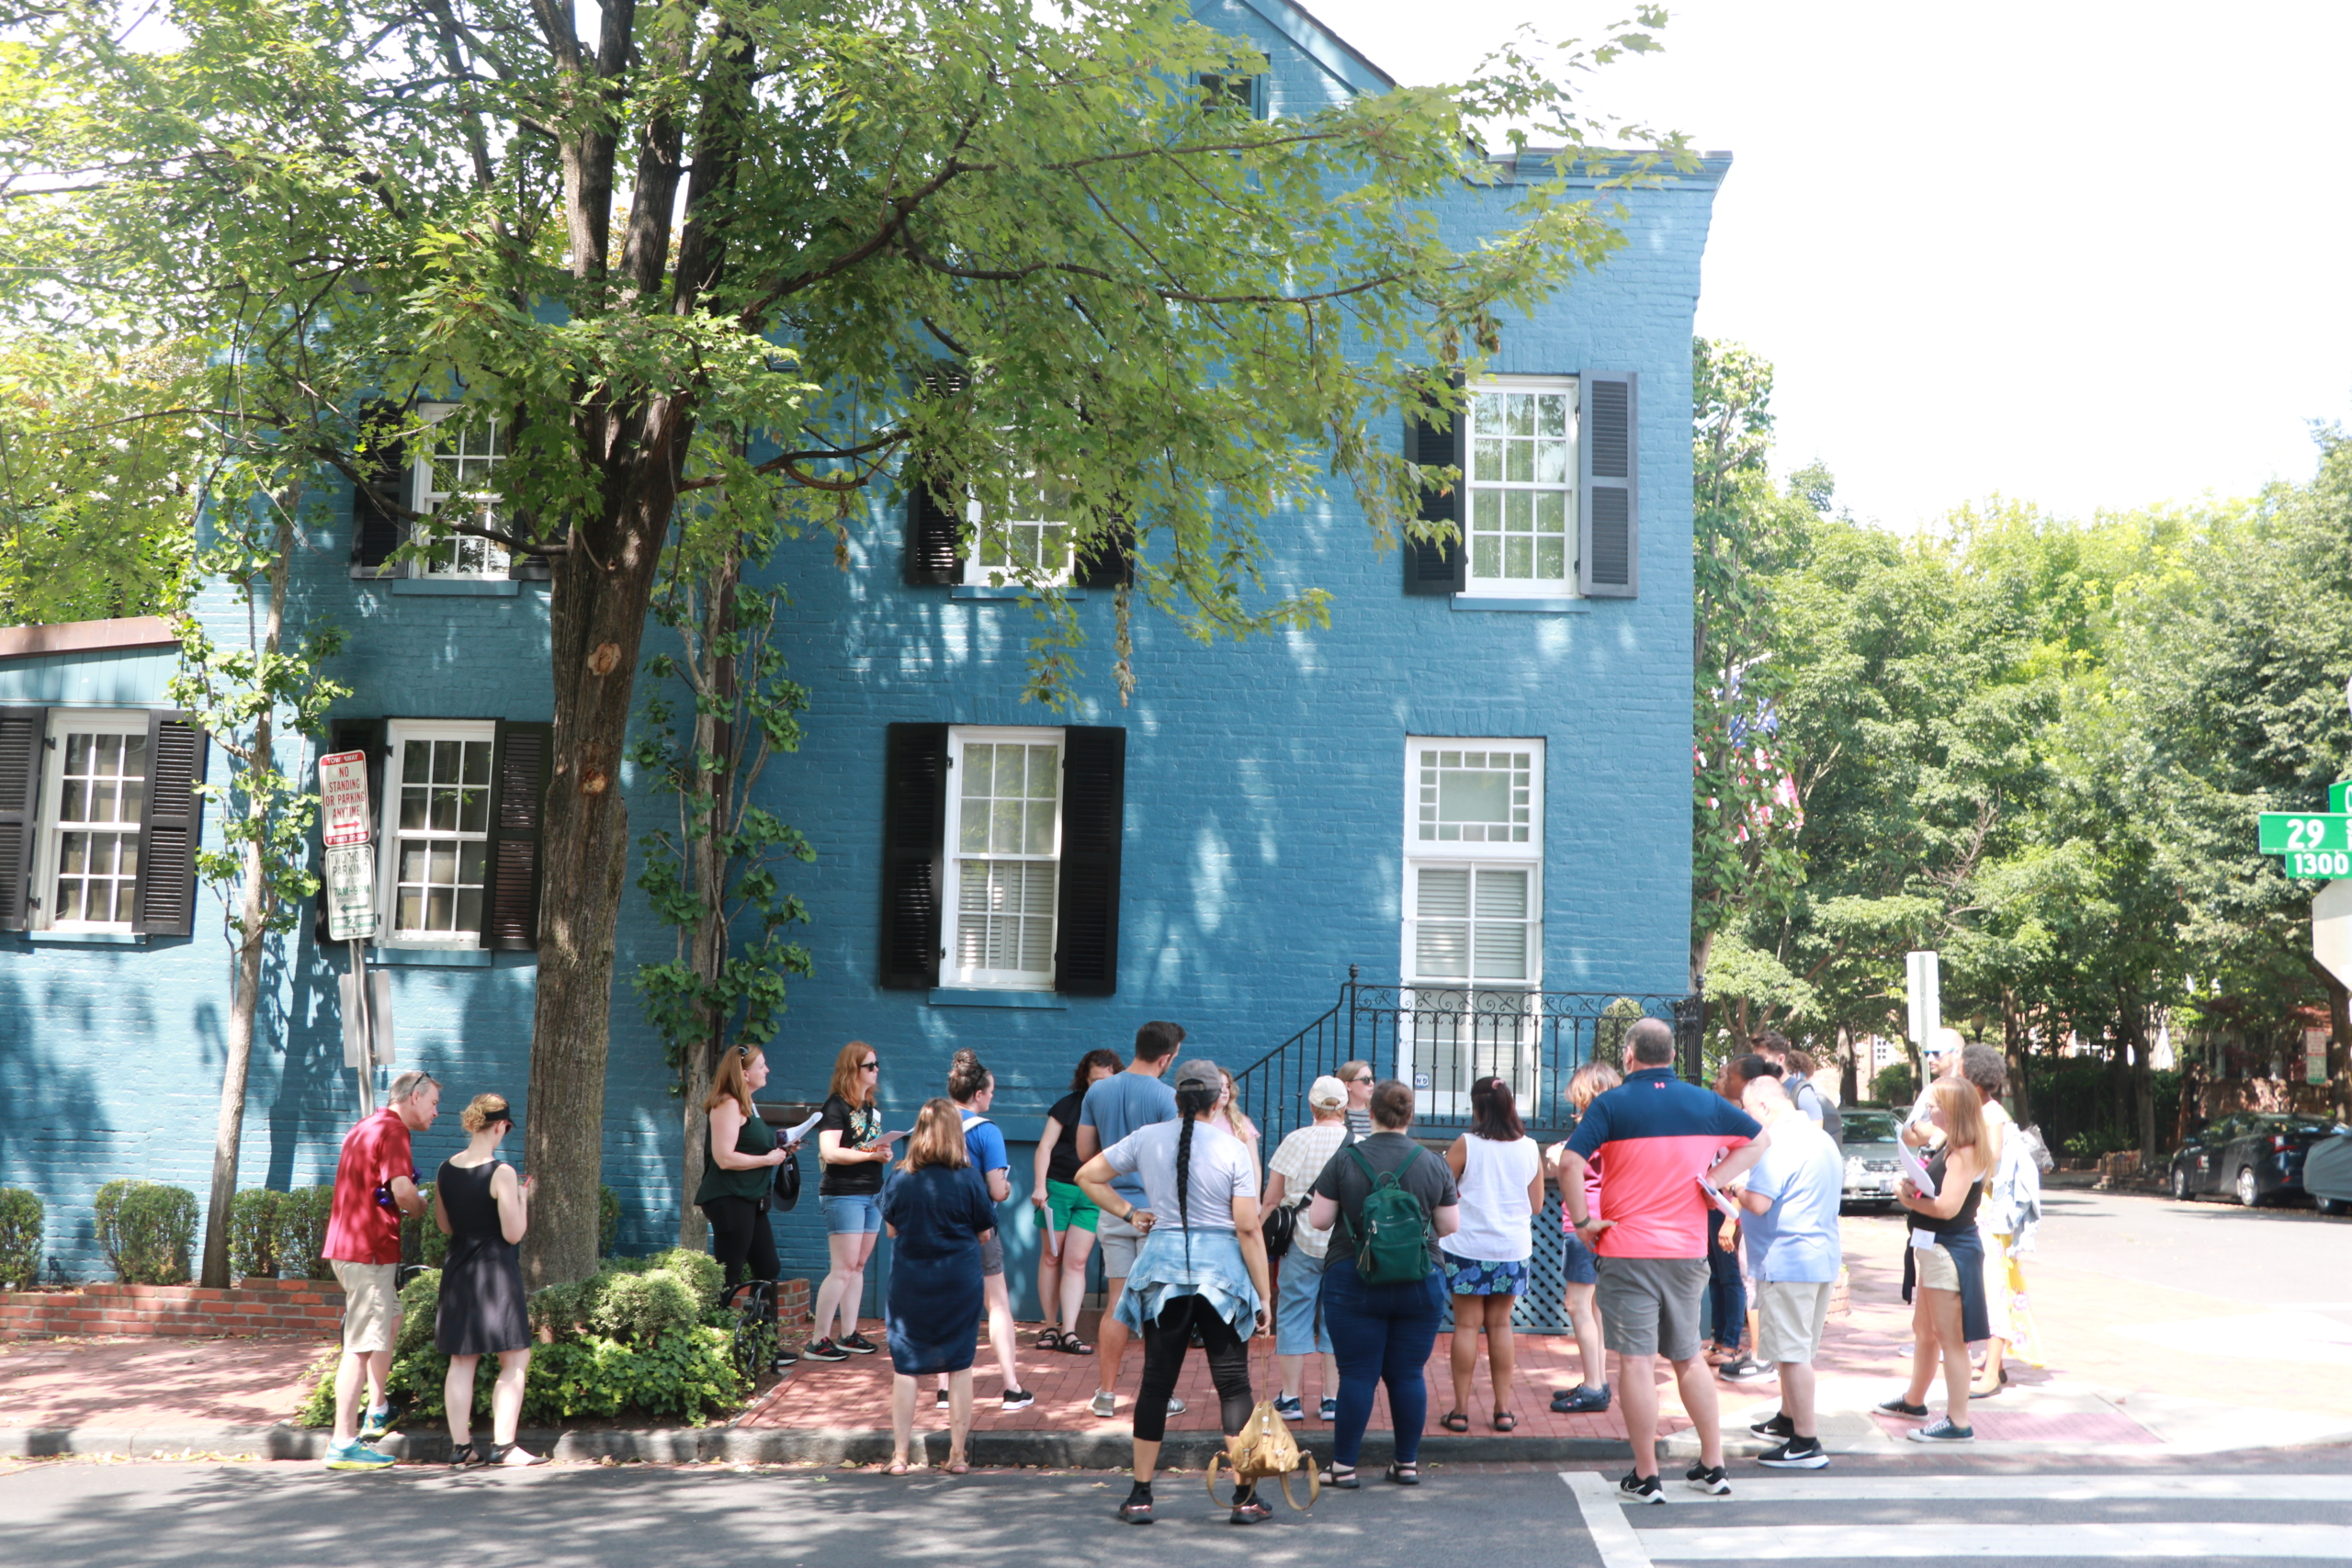 Civil War Washington Teachers surround the blue house in Georgetown